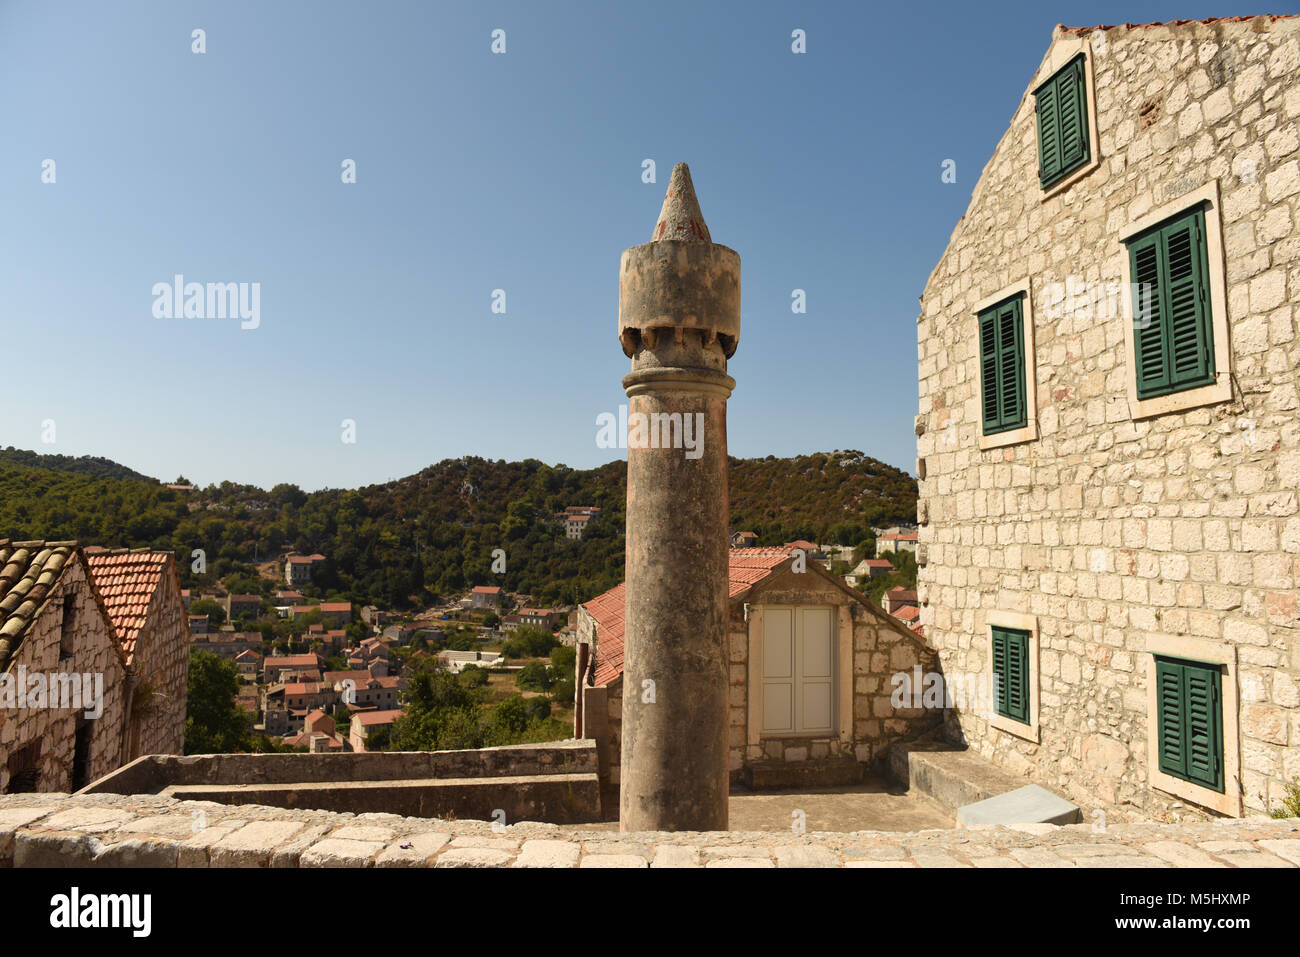 Cylindrical chimneys Fumar (fumari) on Lastovo island, Croatia Stock Photo